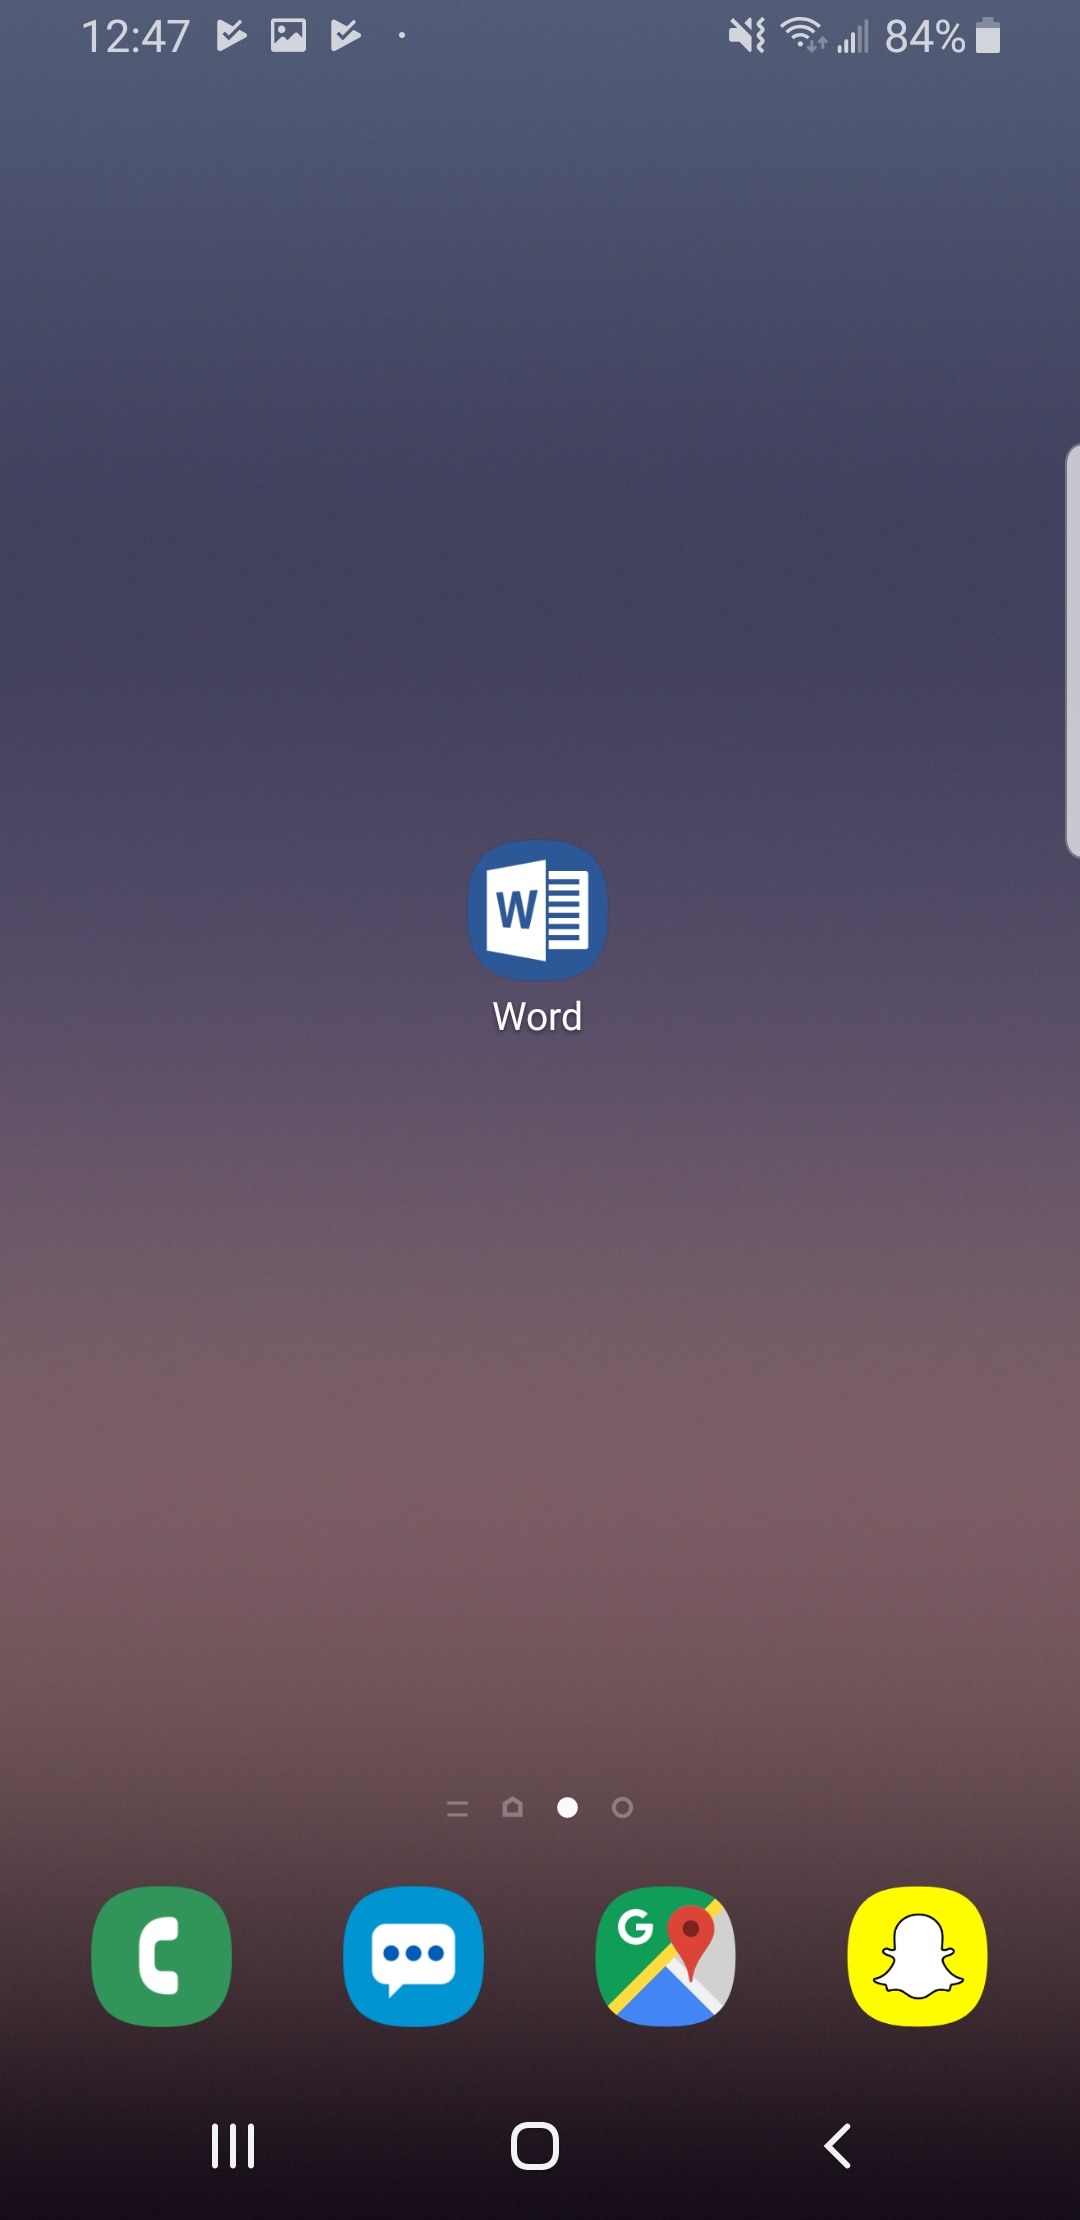 Microsoft Word on Home Screen